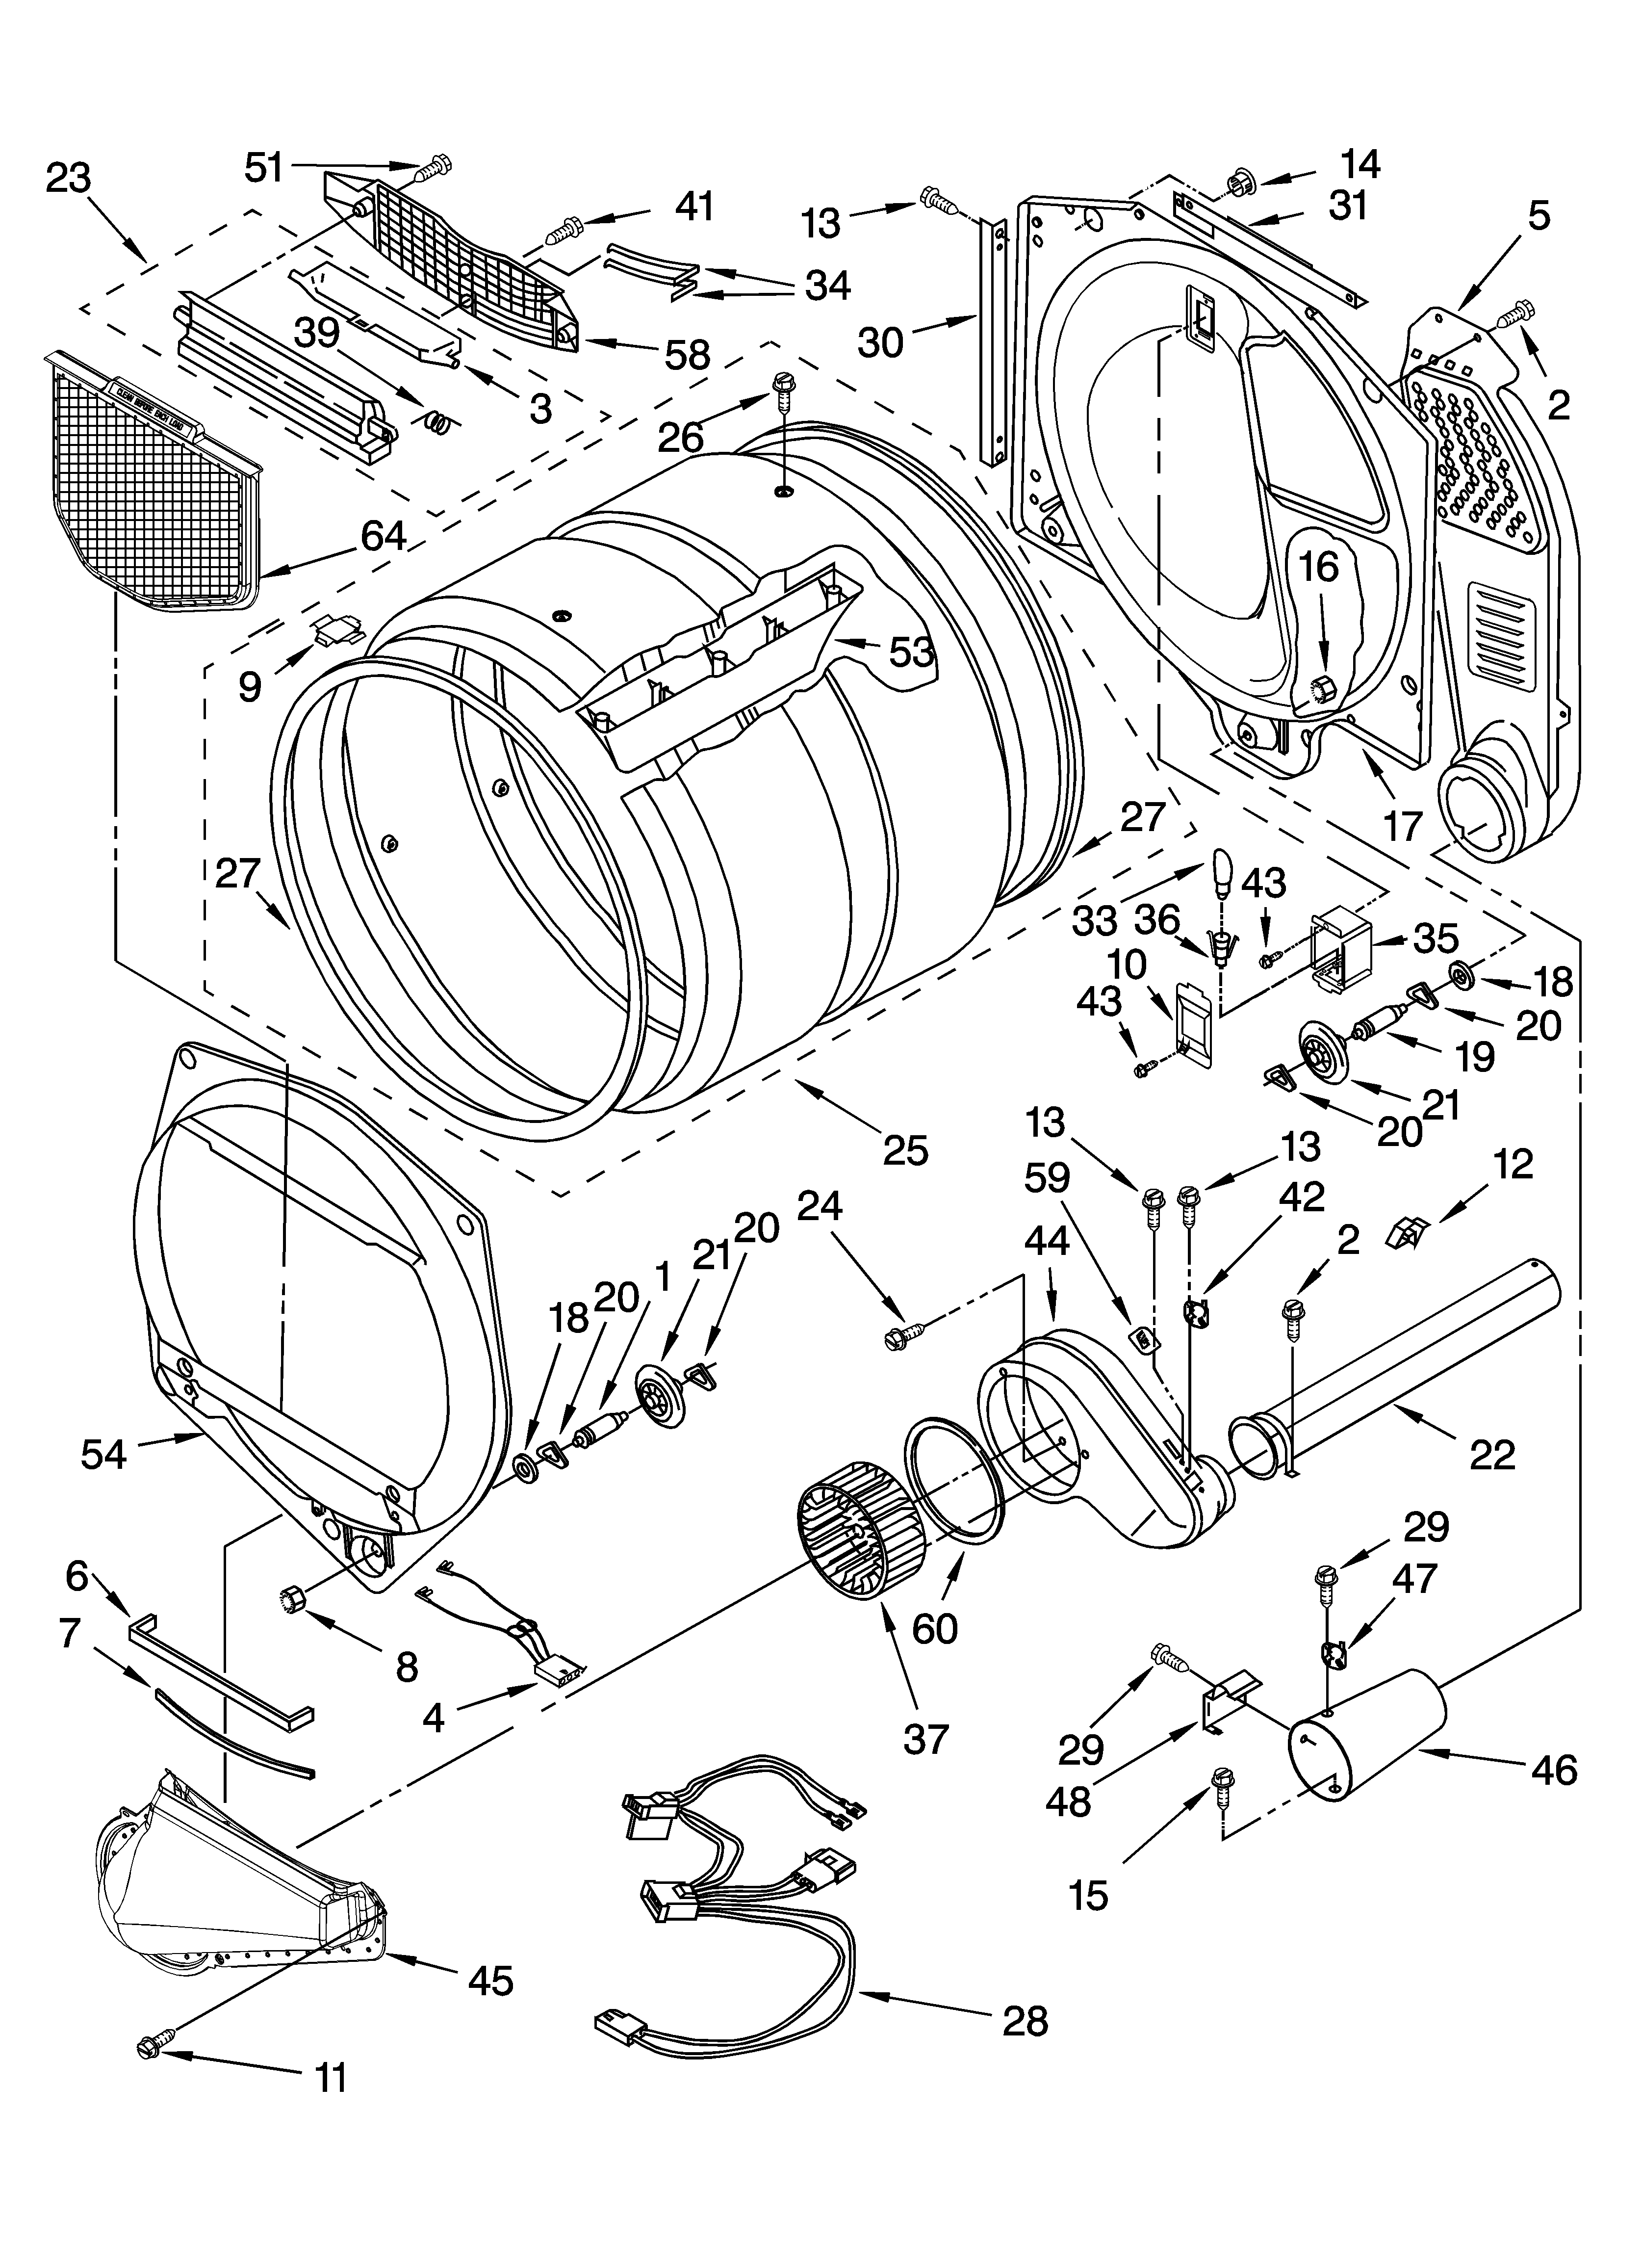 Kenmore Dryer Wiring Diagram Manual